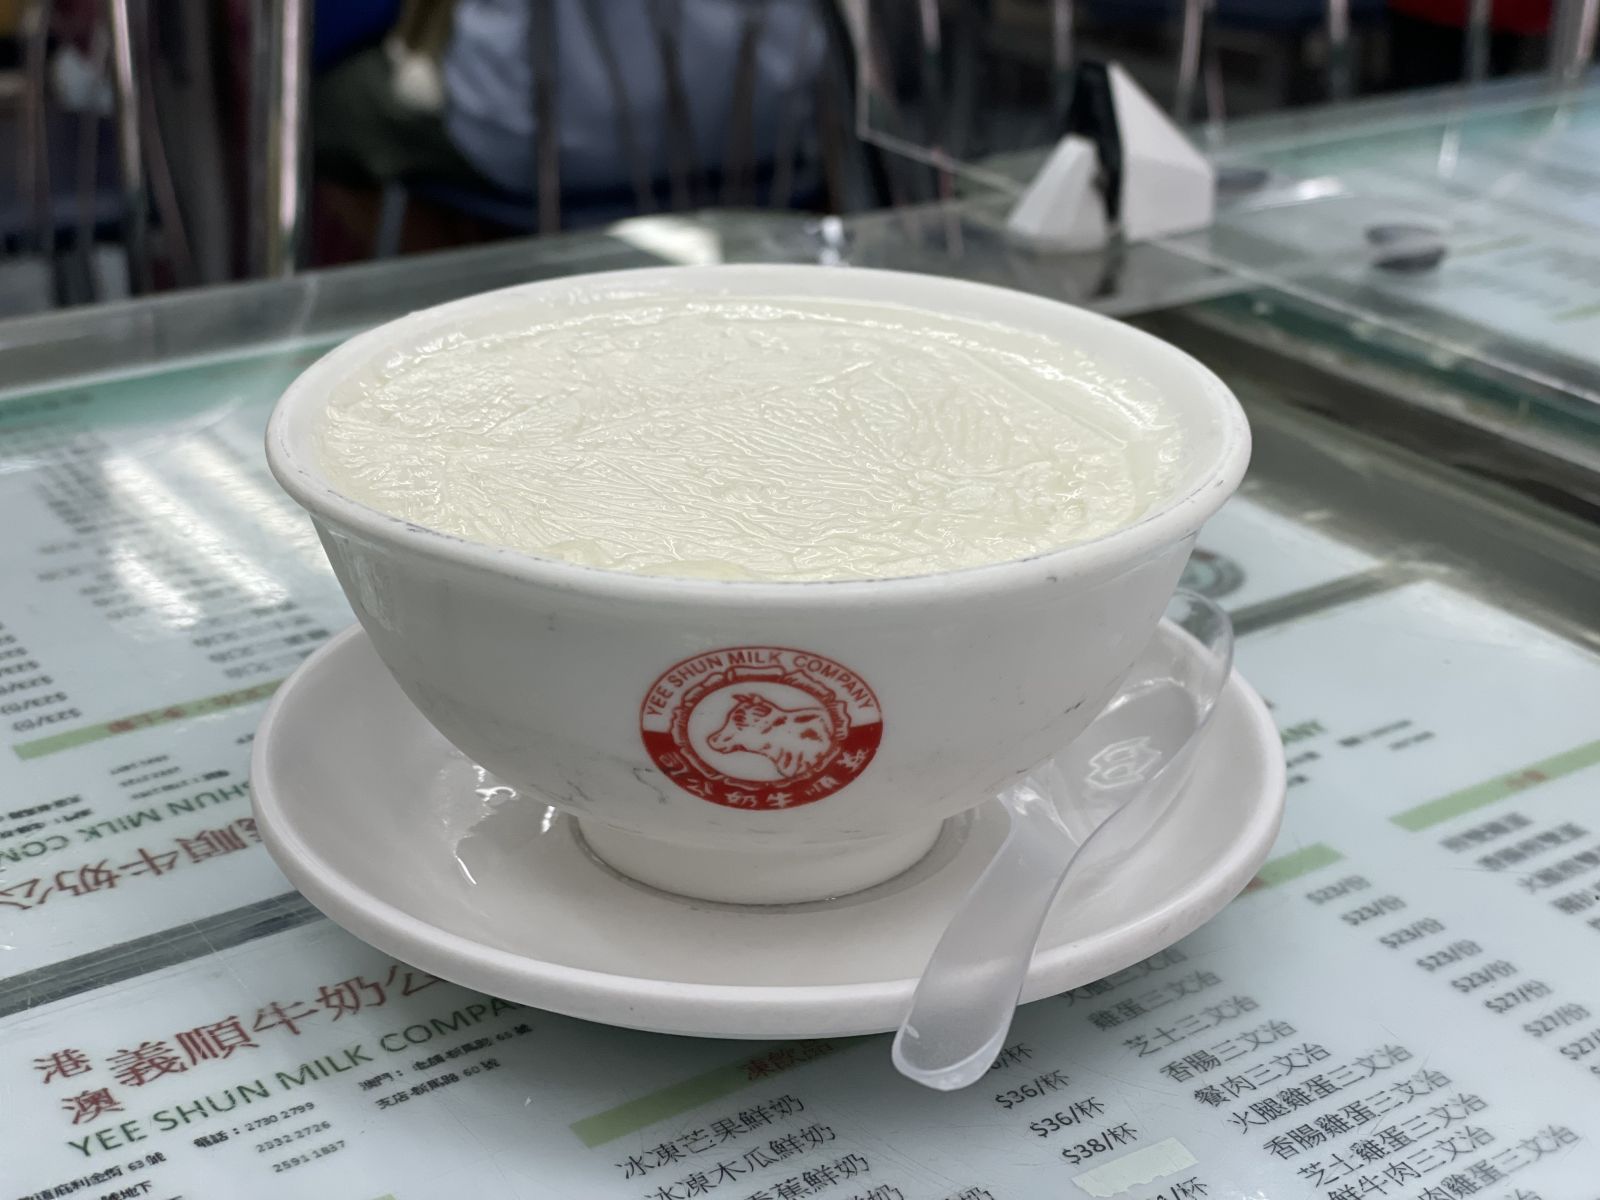 the signature Steamed Milk (雙皮燉奶)